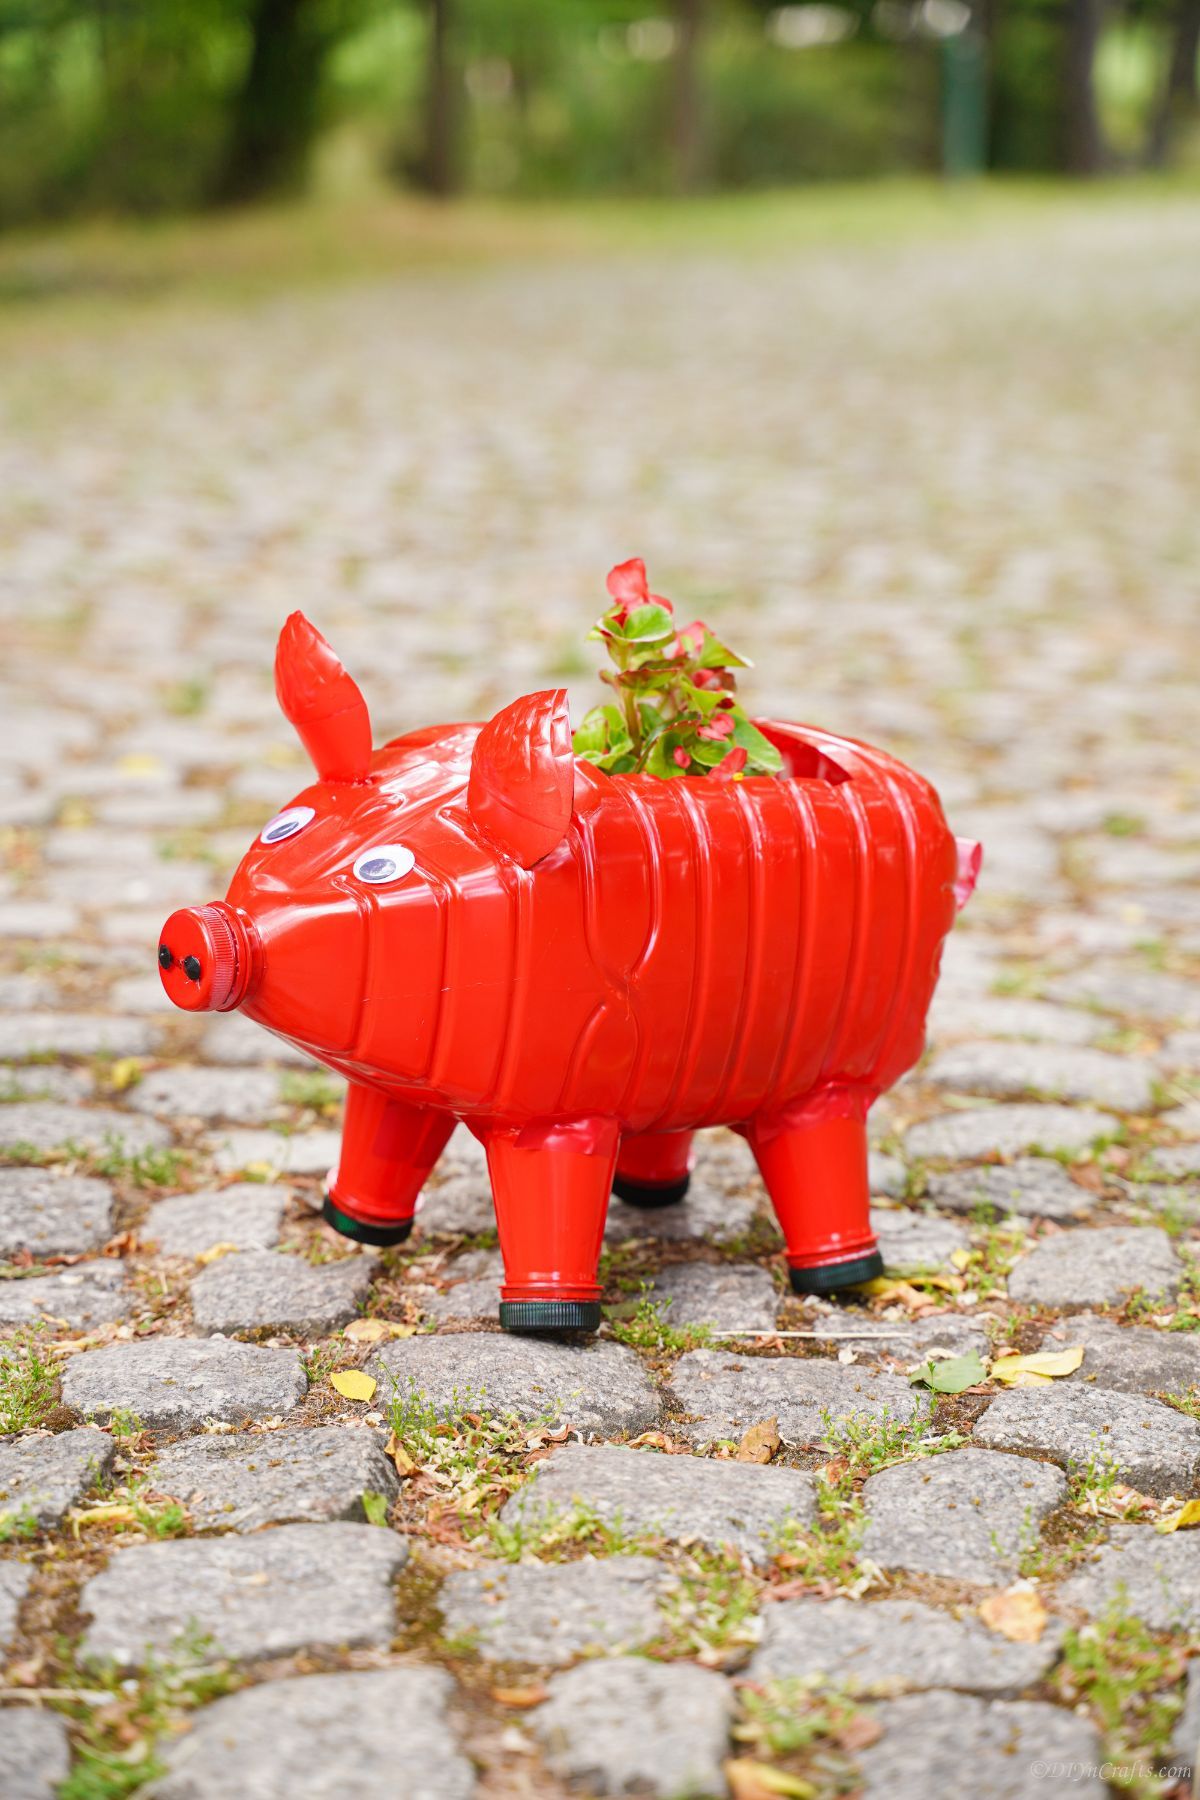 red plastic pig planter on cobblestone path